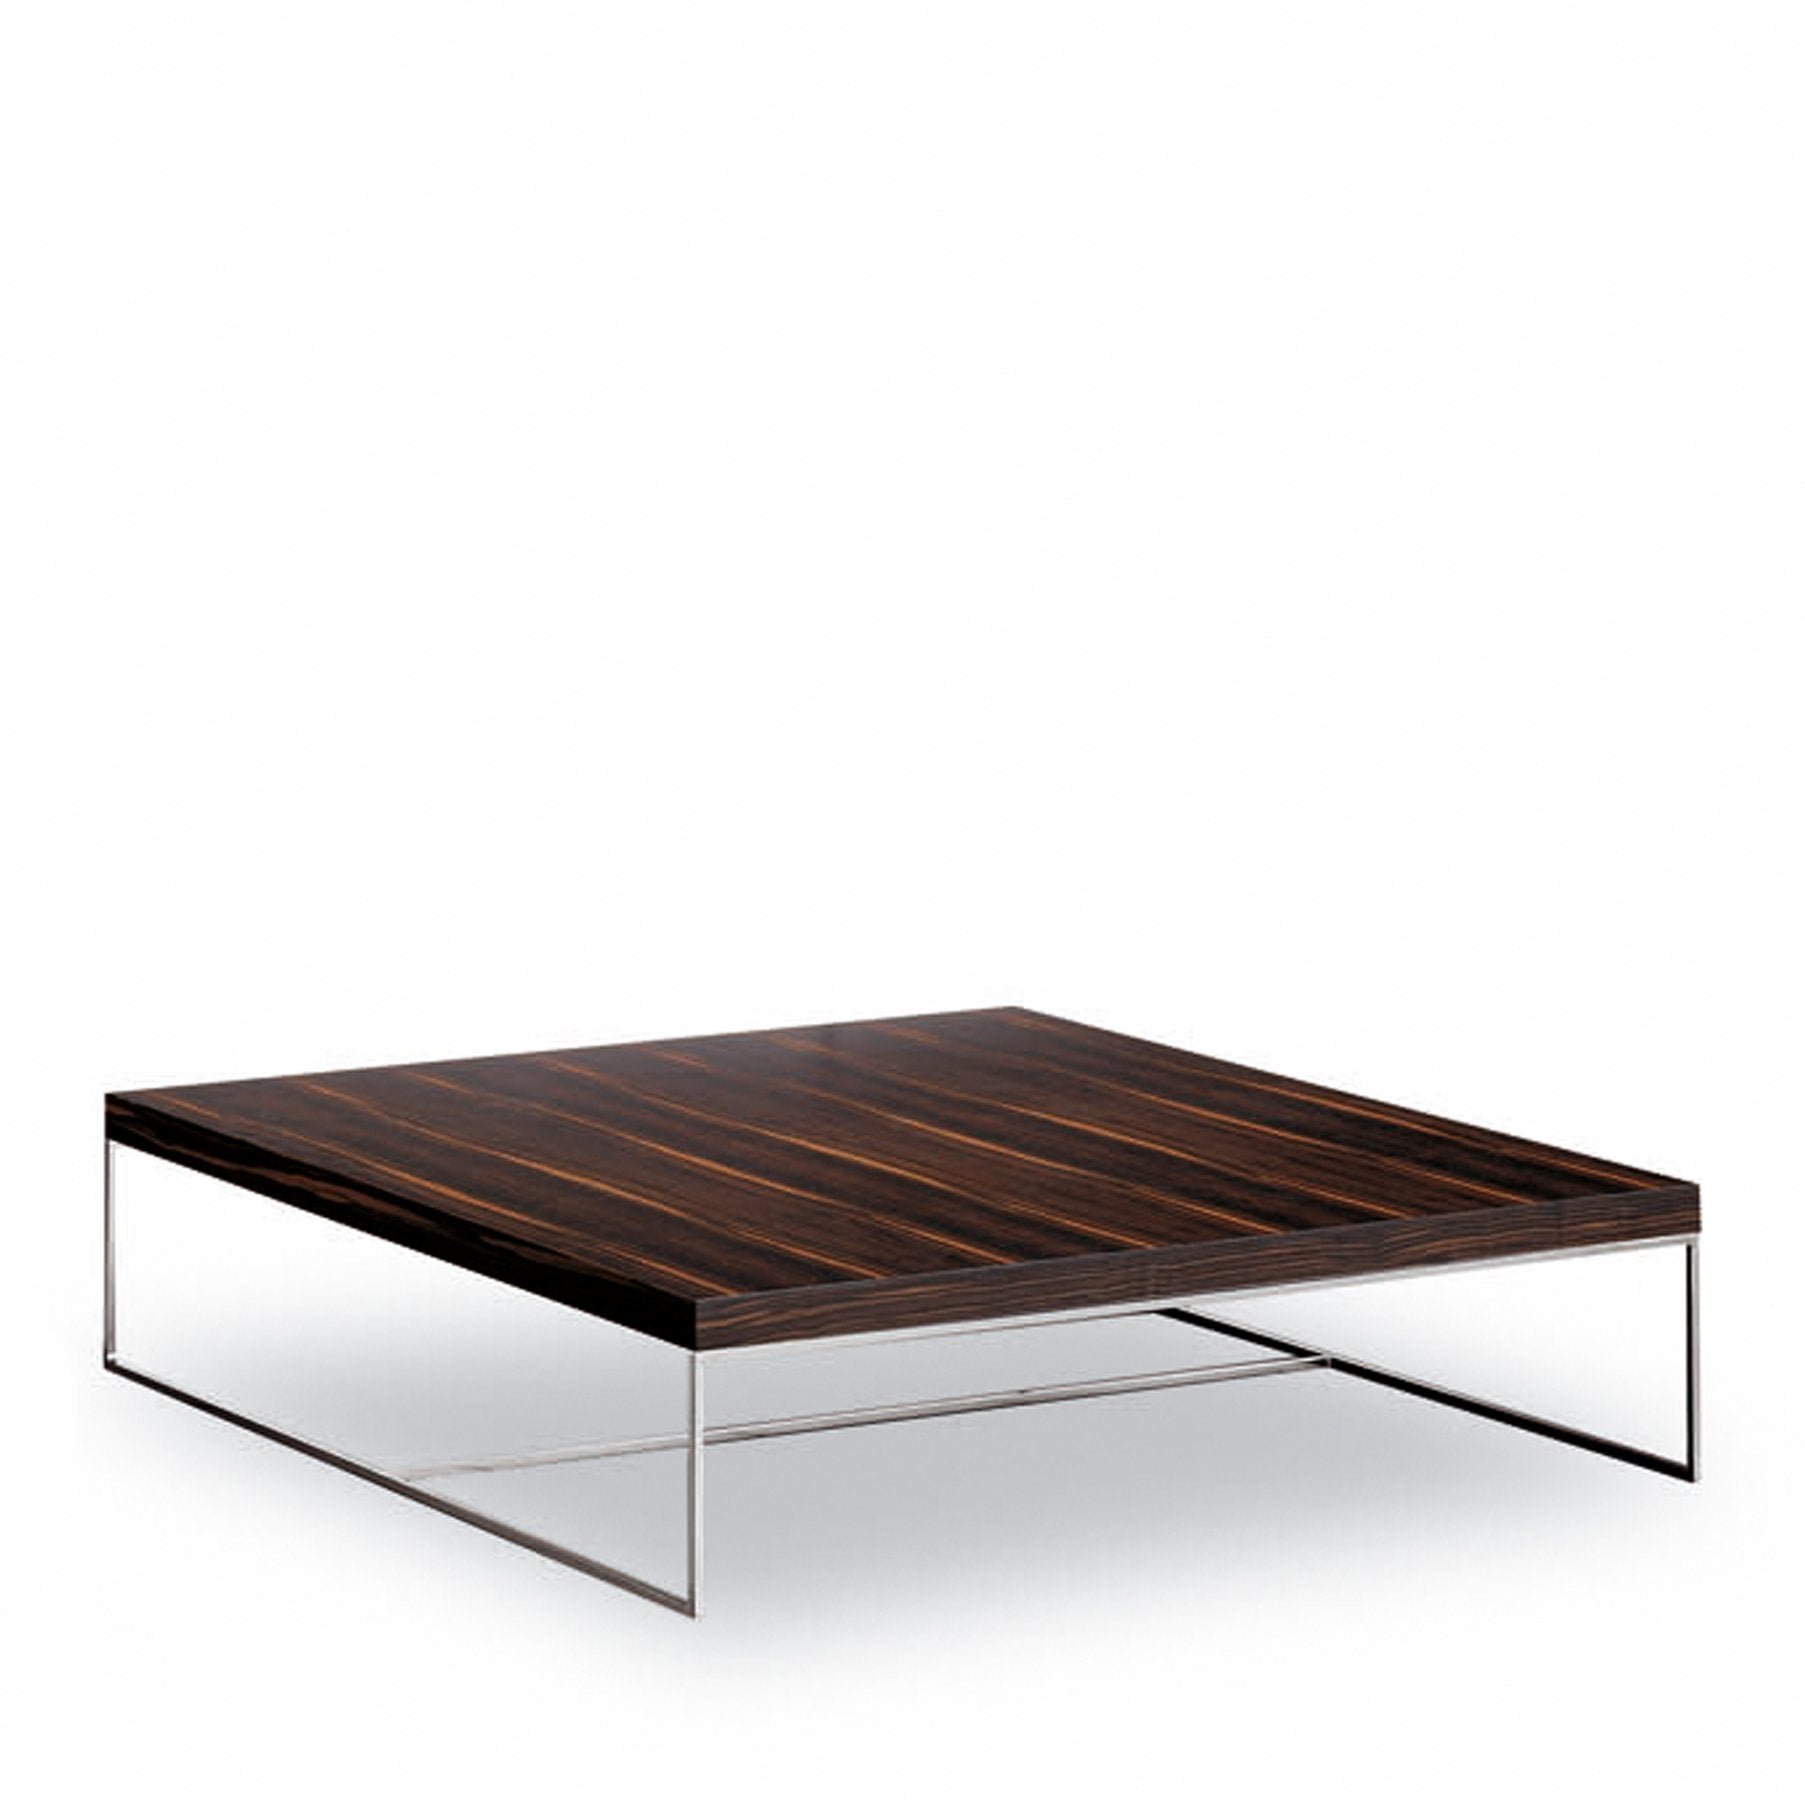 Calder Table